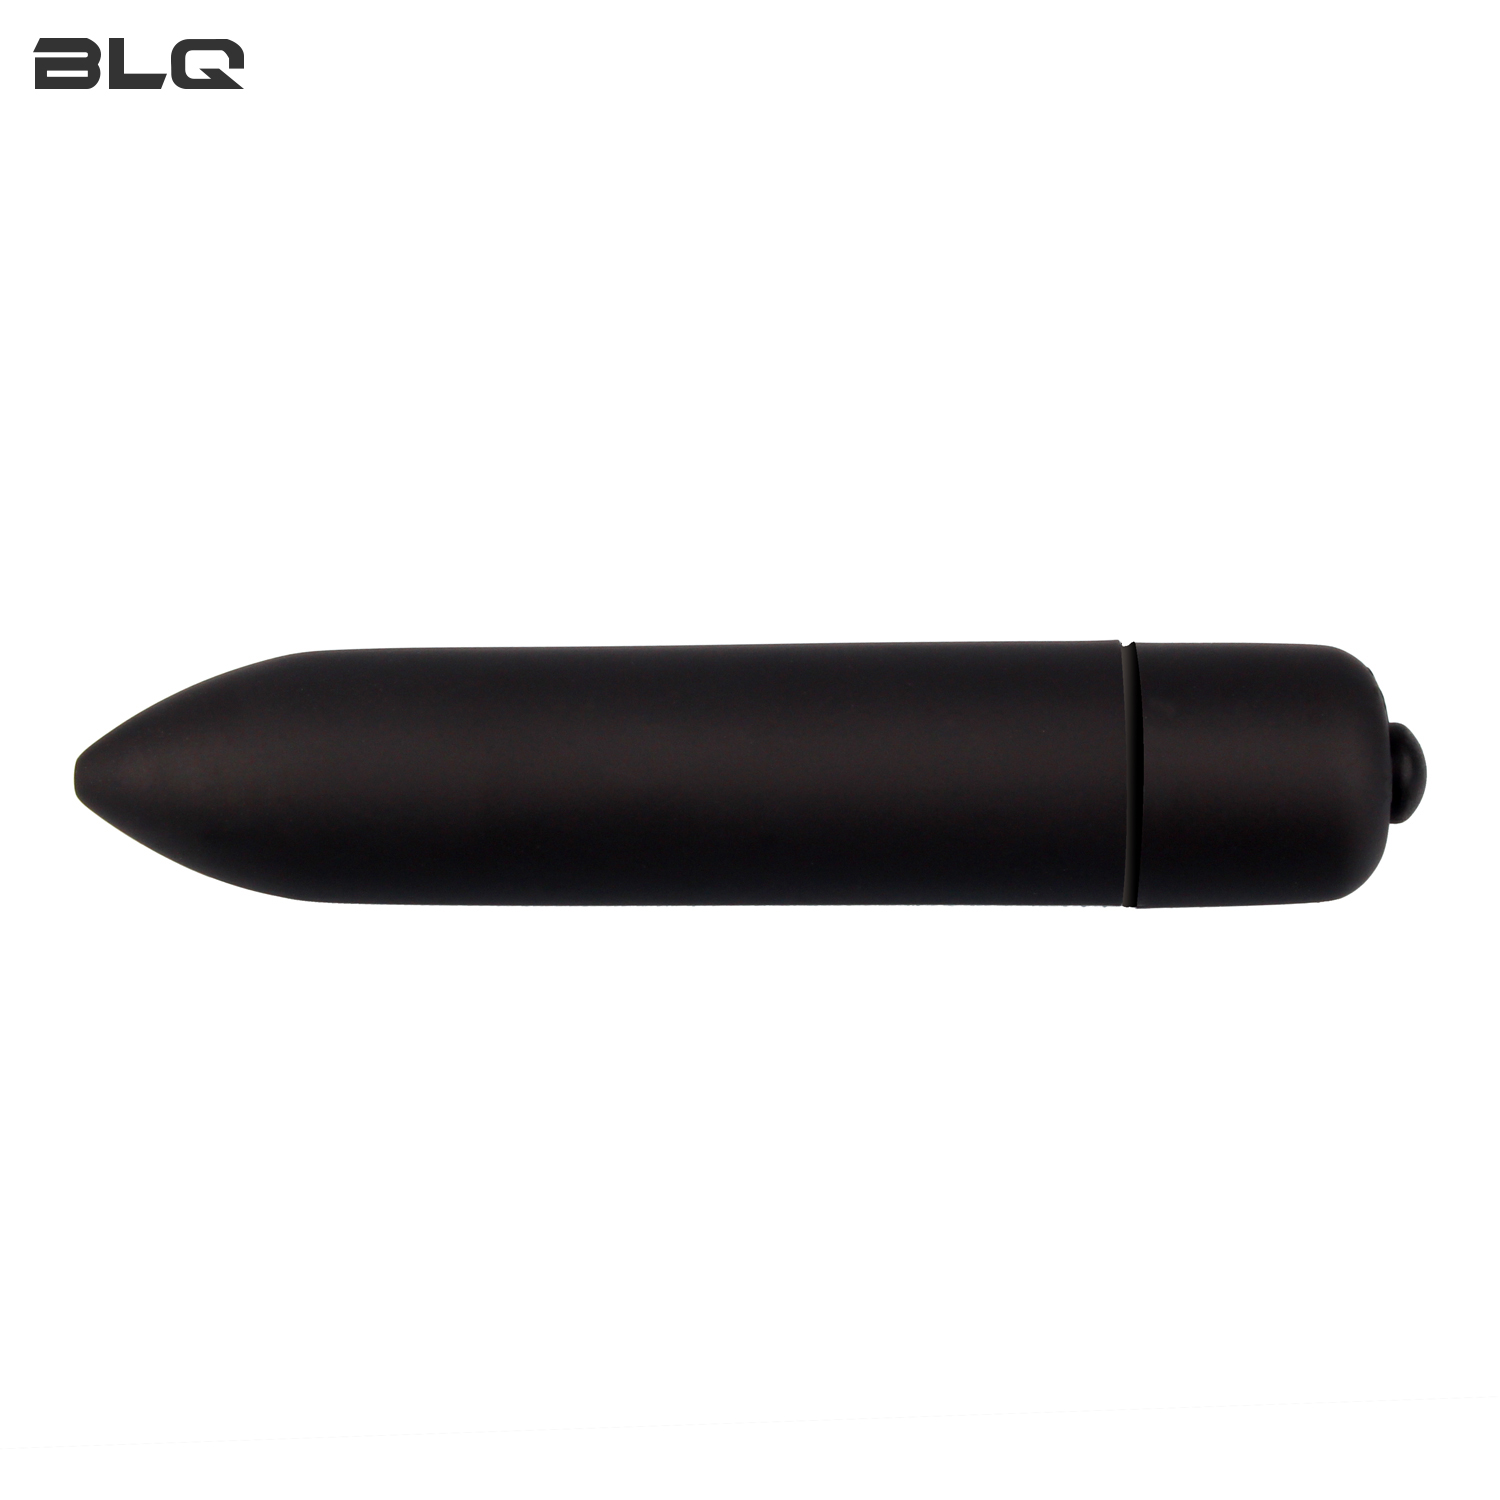 Palm-sized Clit-stimulating Bullet Vibrator